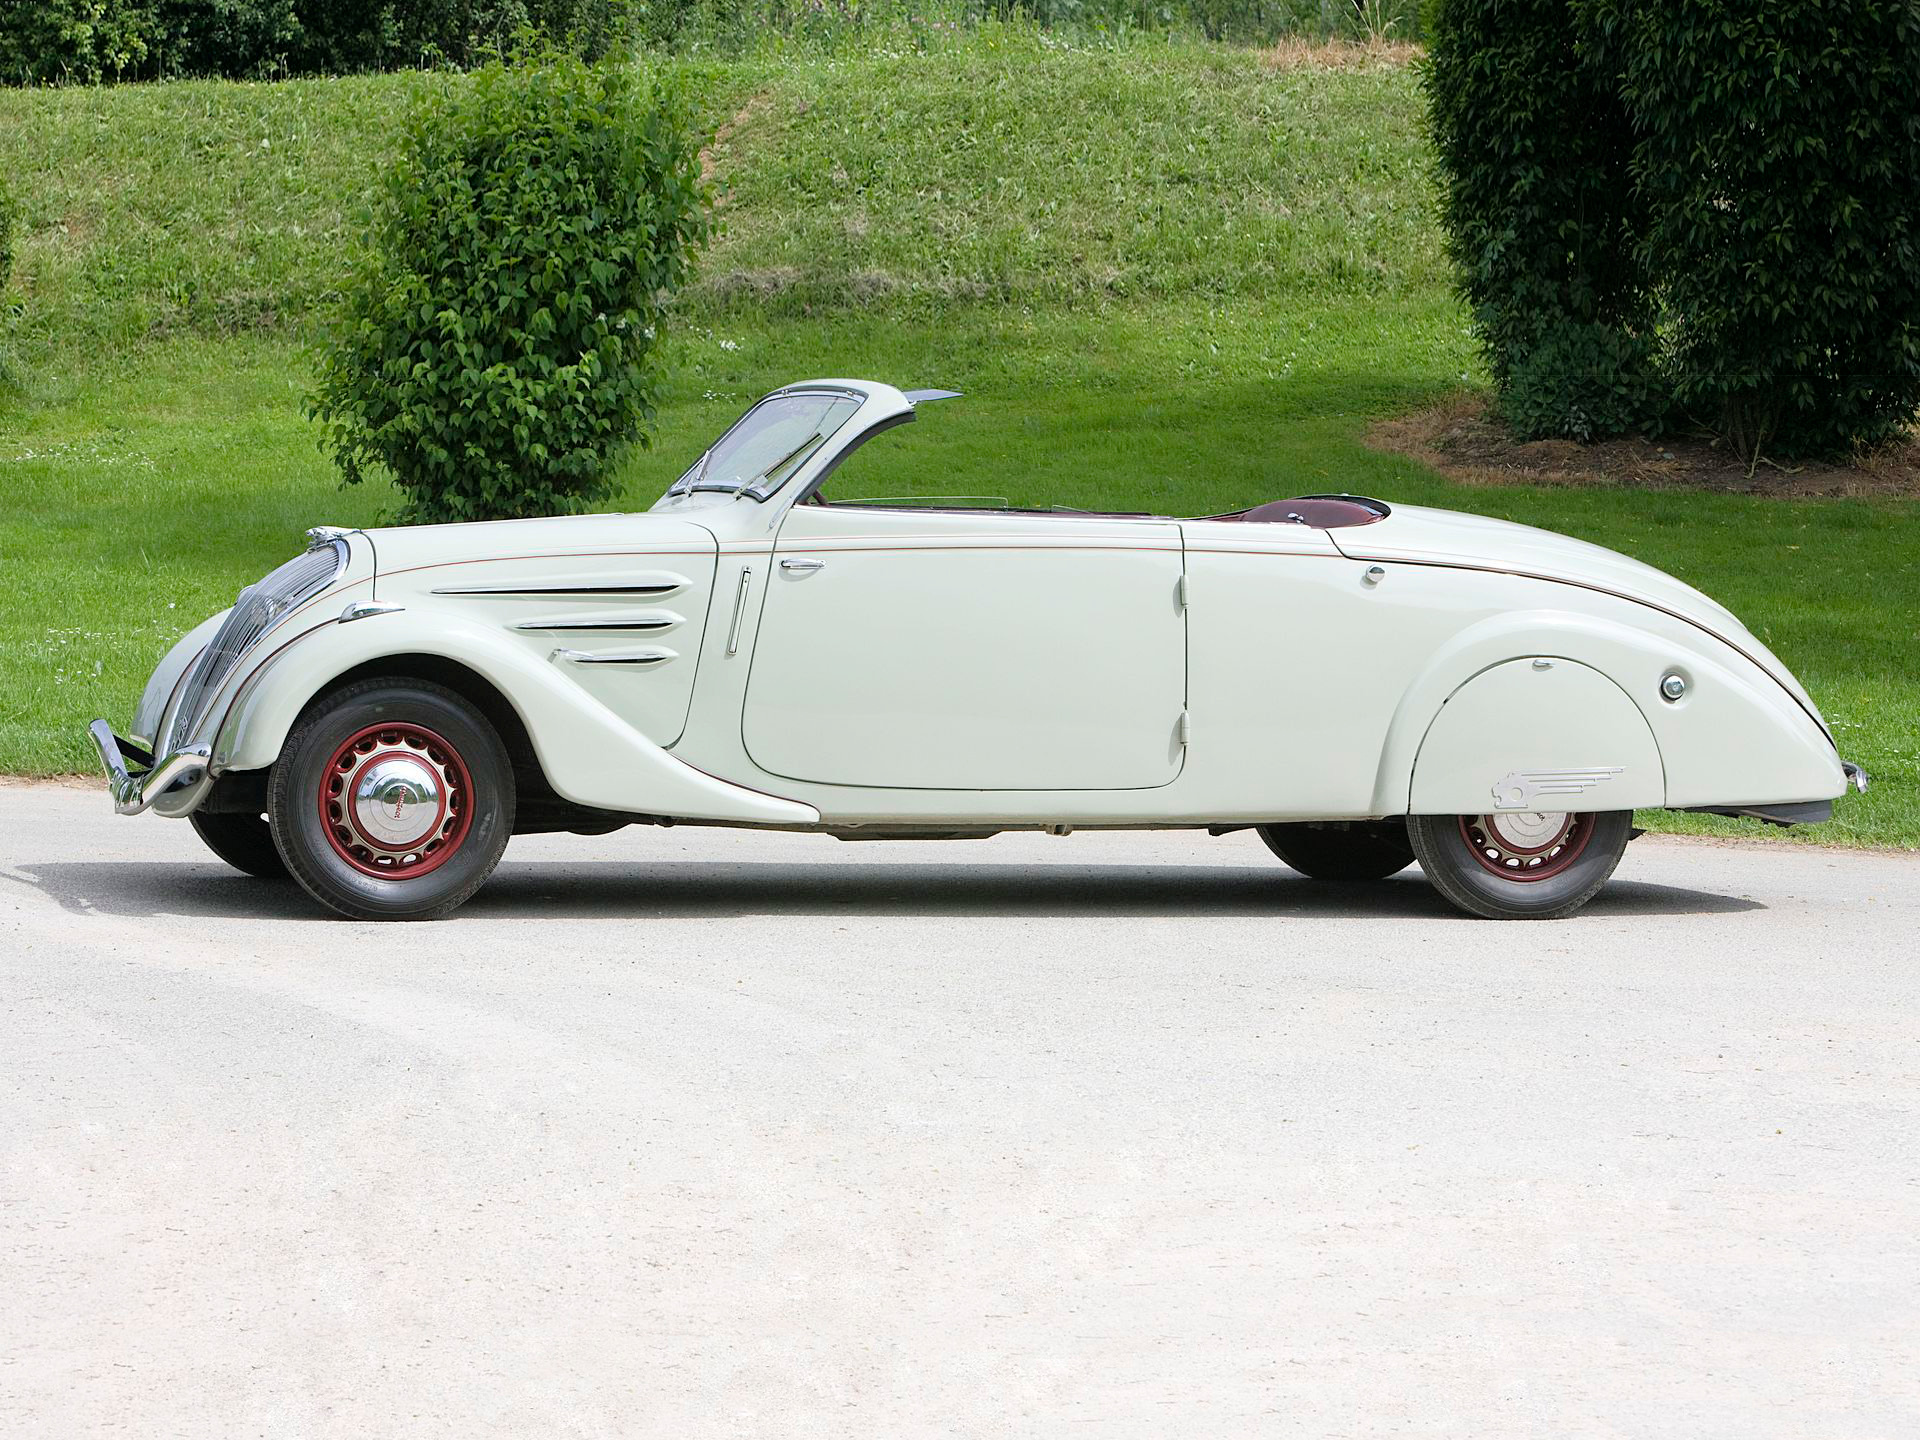 1937, Peugeot, 402l, Eclipse, Retro, Luxury, Convertible Wallpaper